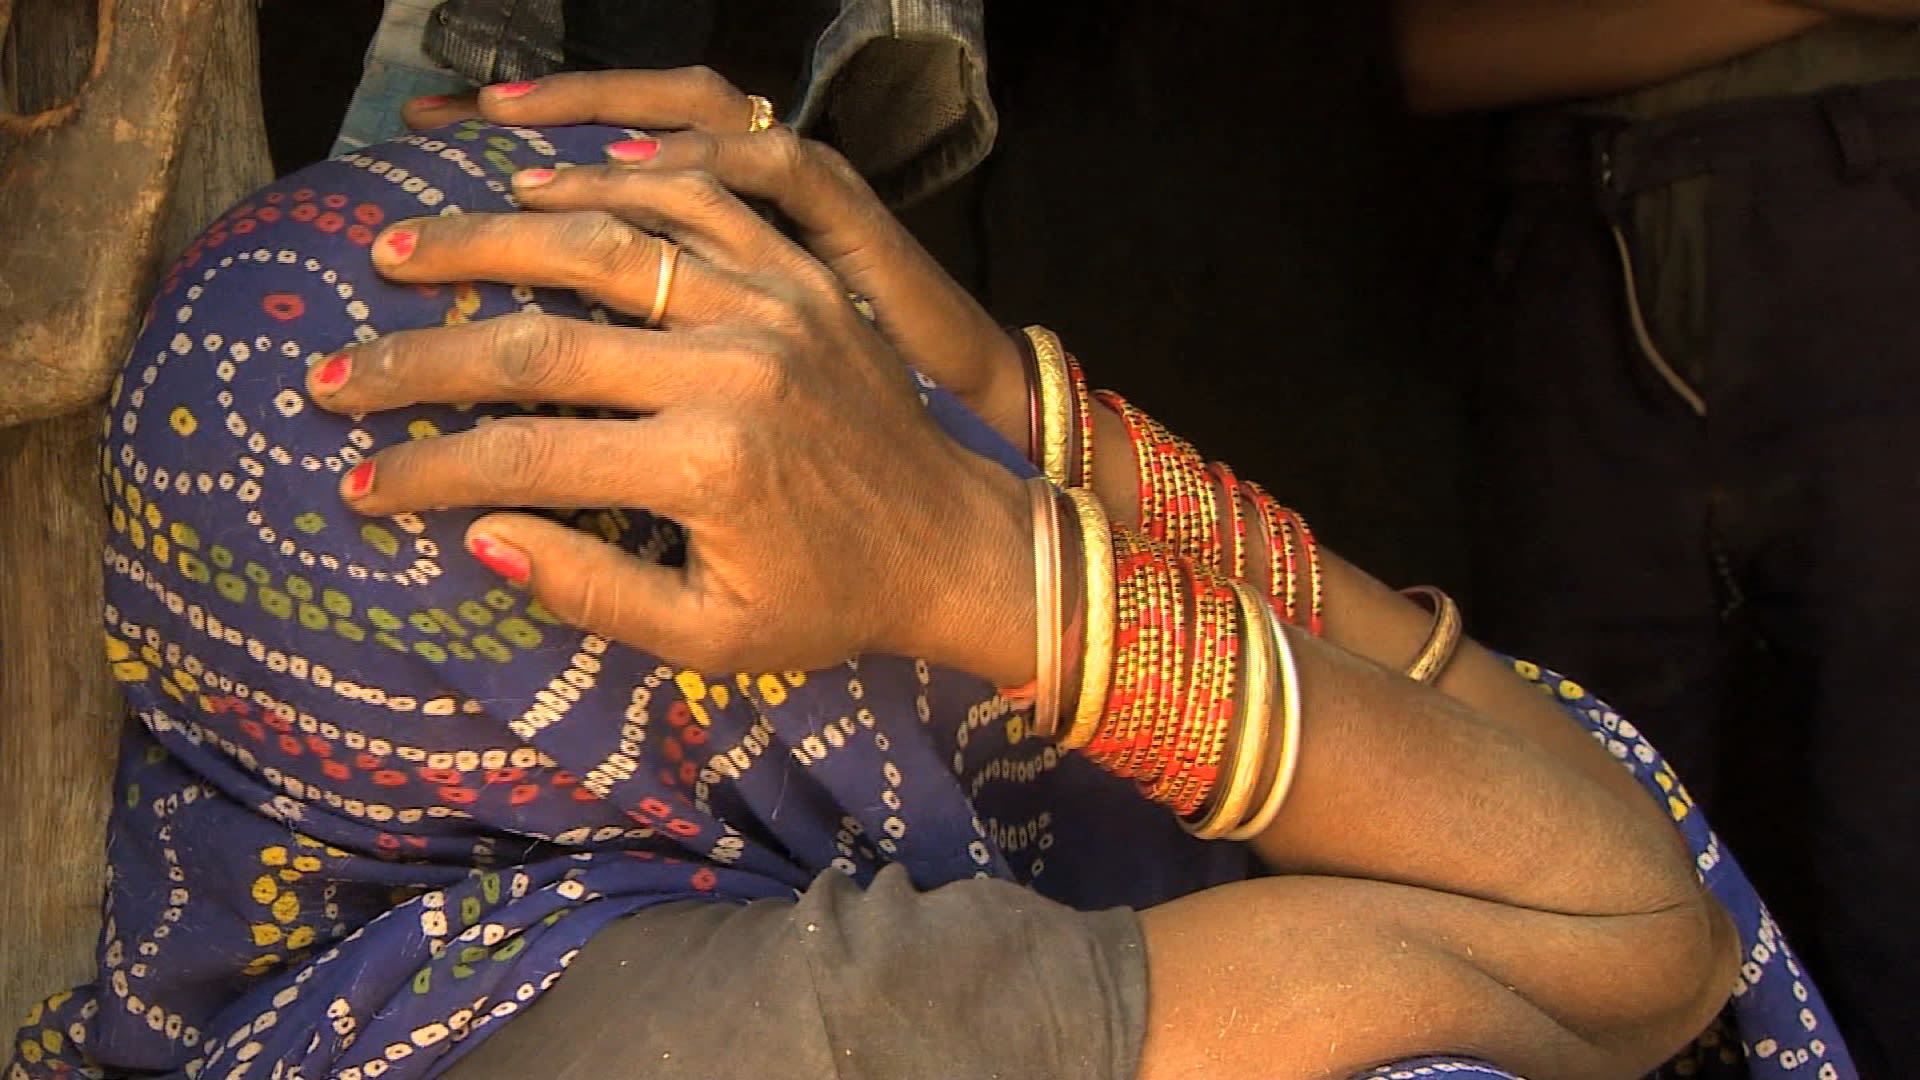 Third Indian allegedly raped, set on fire | CNN